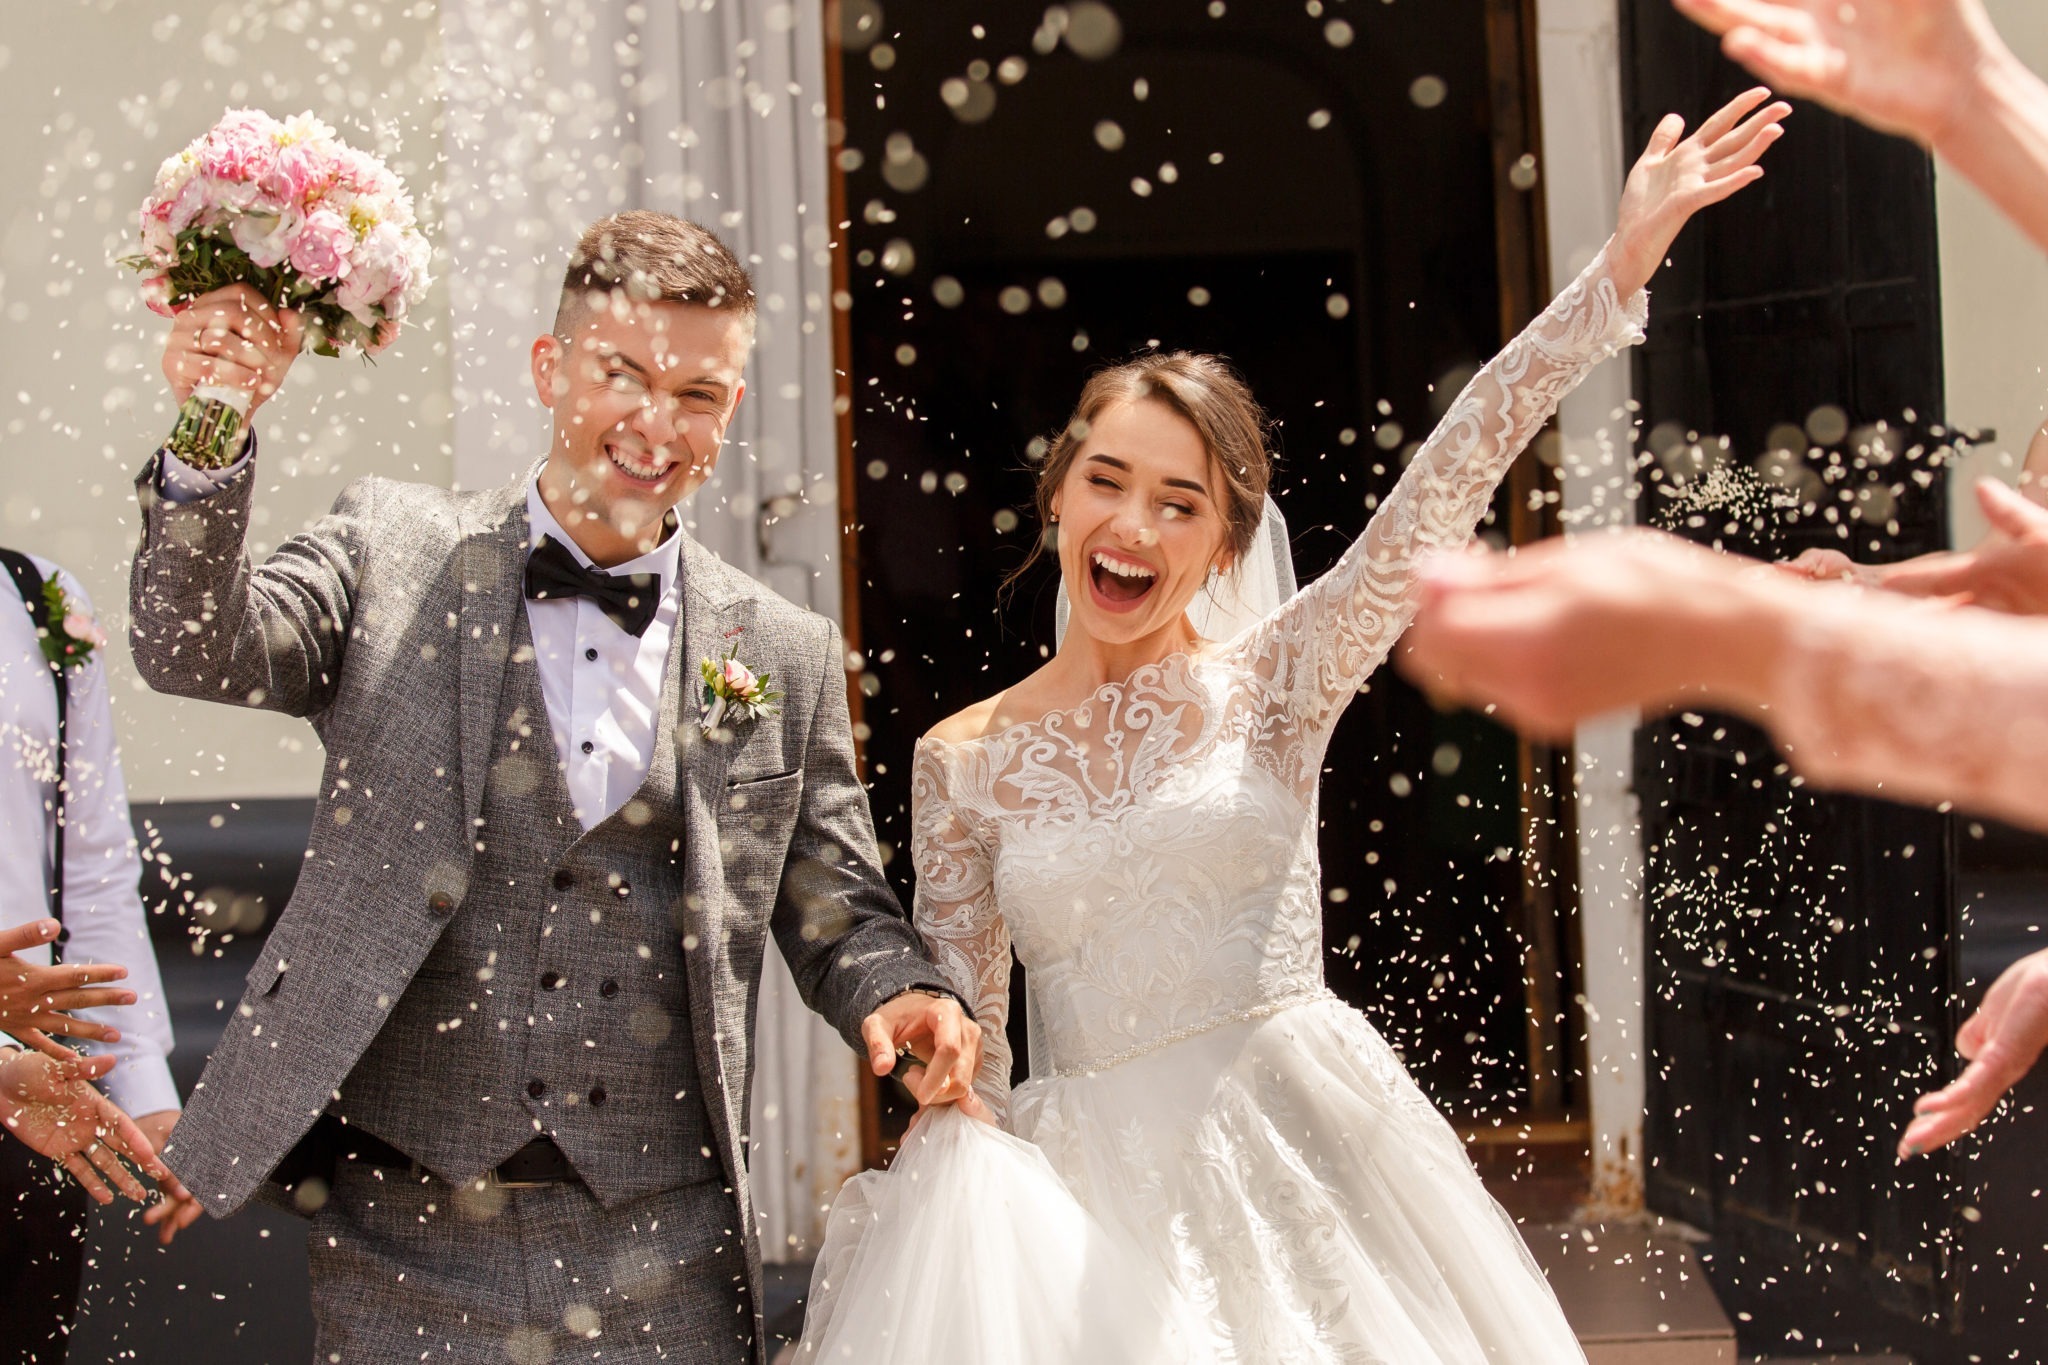 6 Insider Tips For Planning A Stylish Wedding